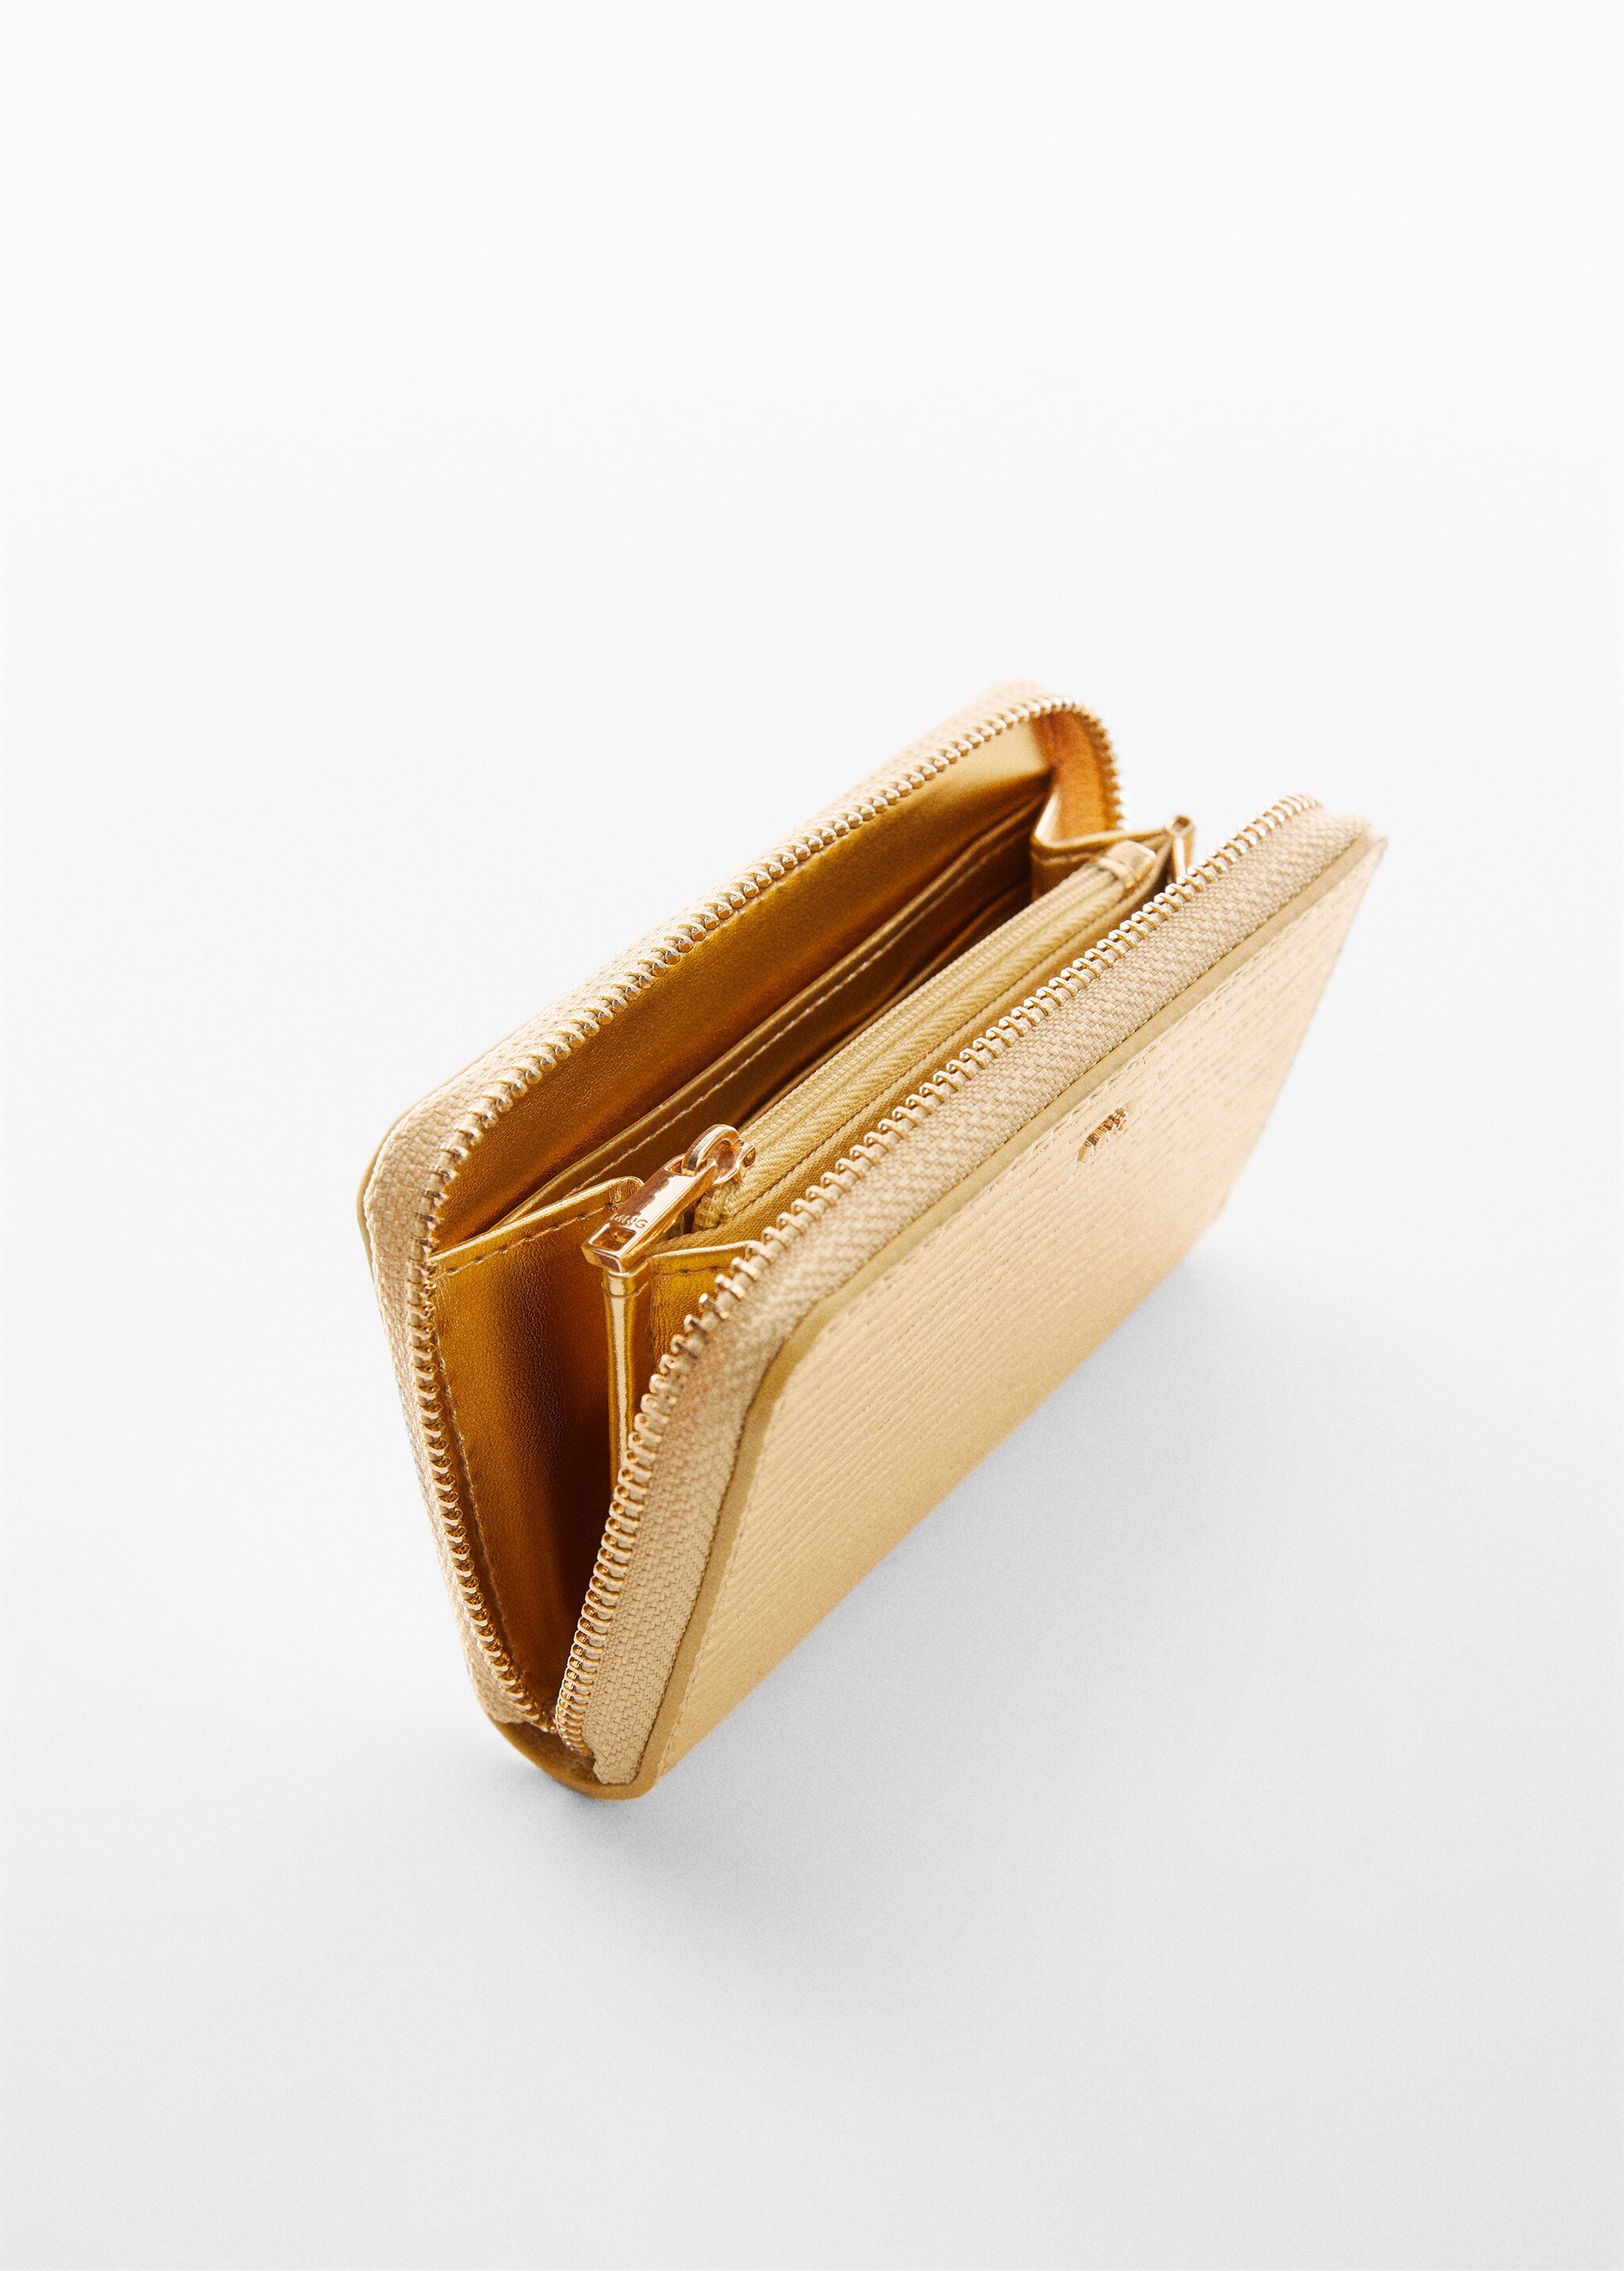 Textured wallet with embossed logo - Medium plane